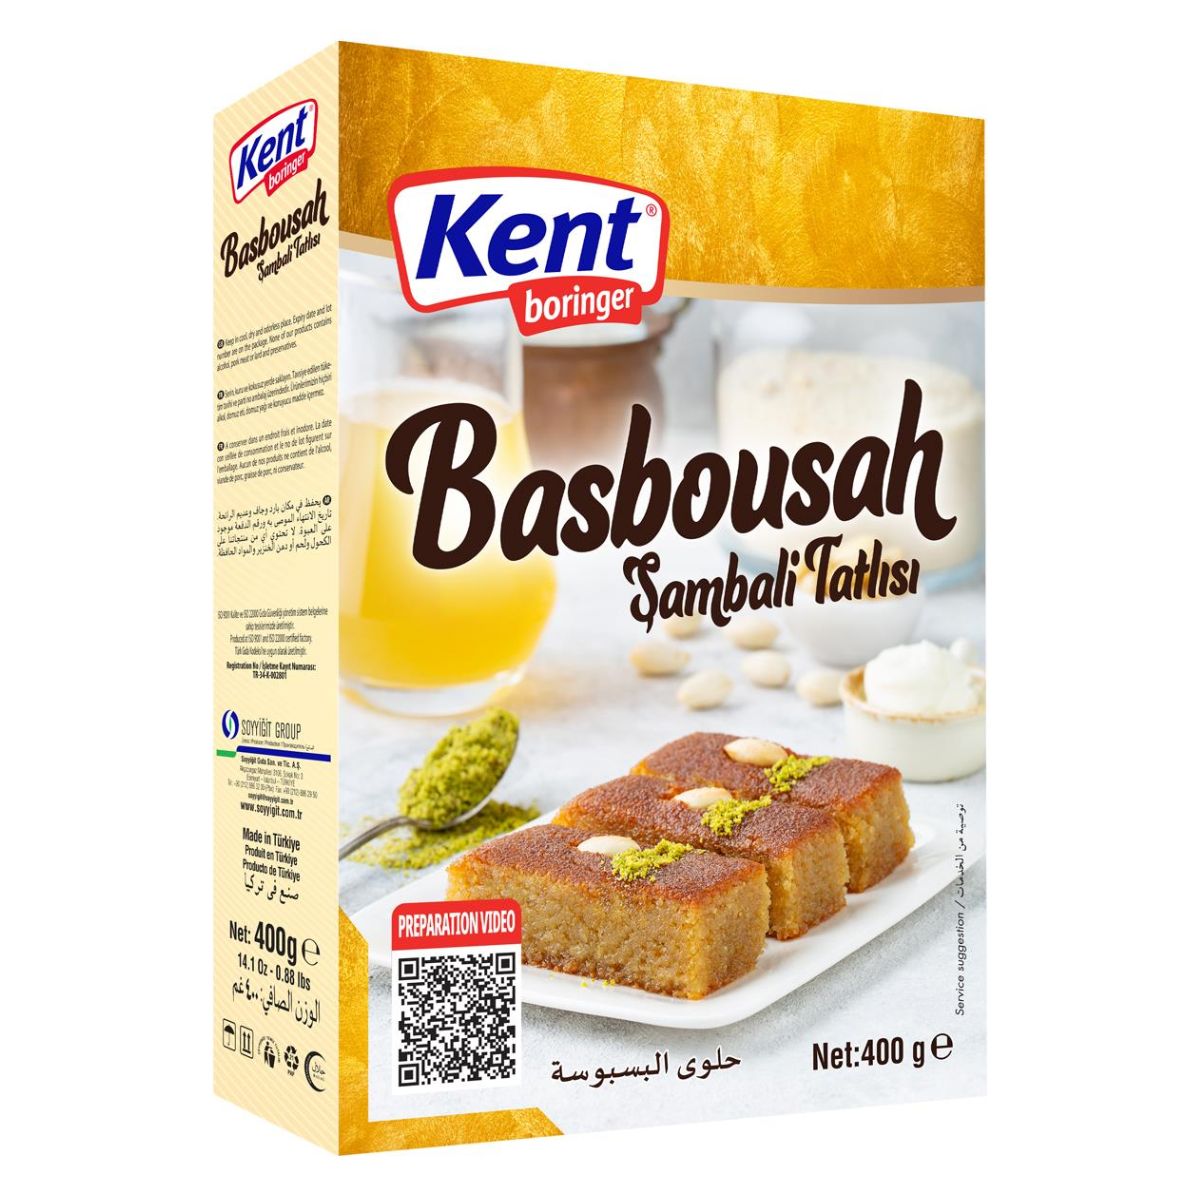 Kent basboush Kent - Basbousah Mix (Sambali Tatlisi) - 400g.